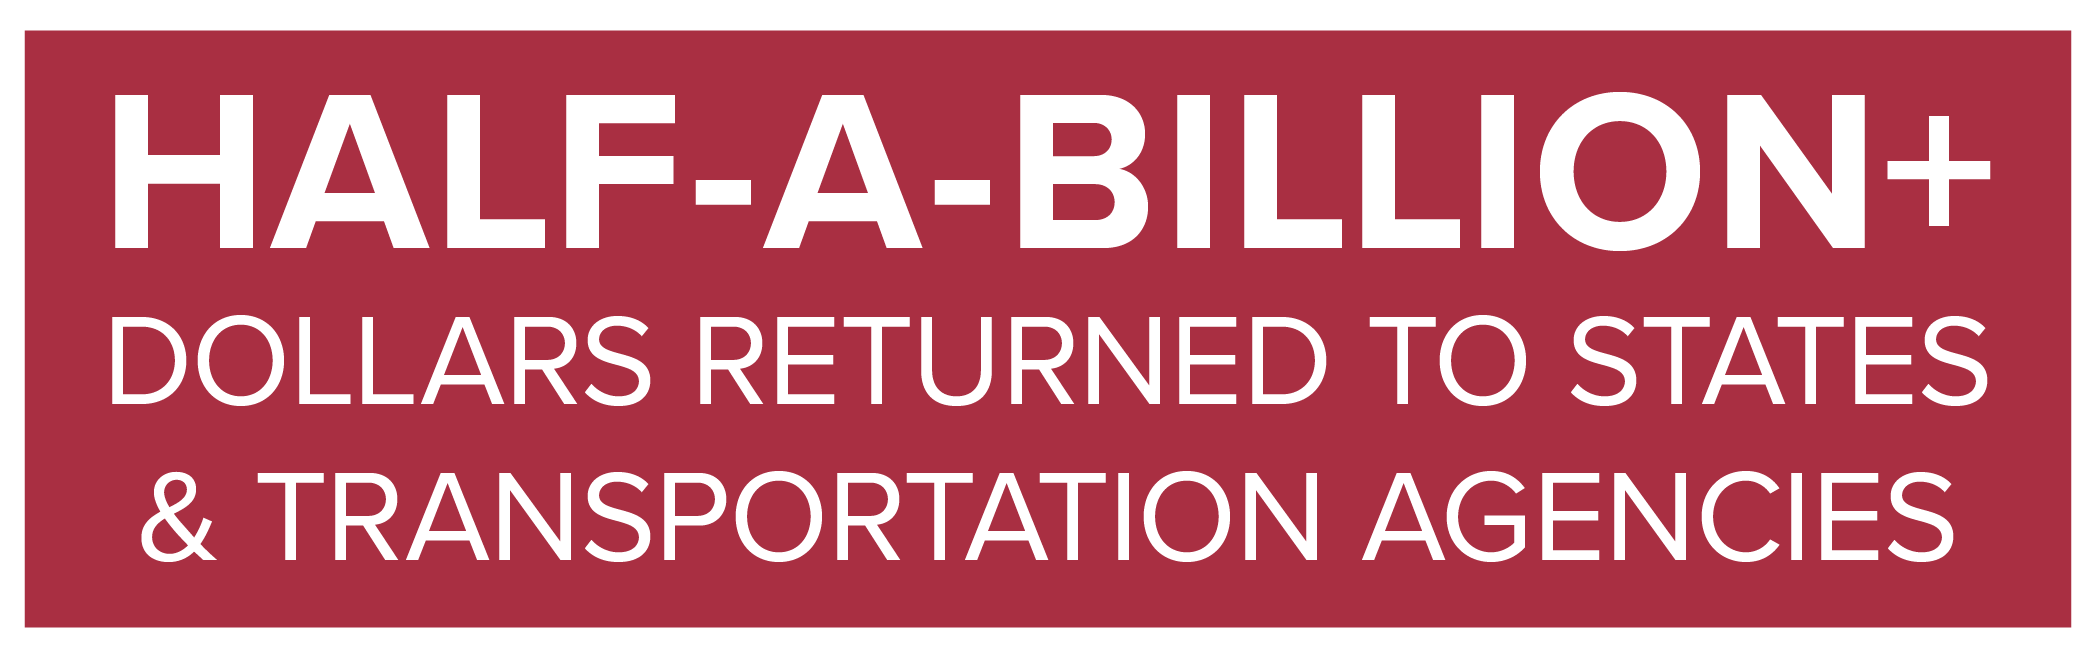 Half a Billion dollars returned to states and transportation agencies